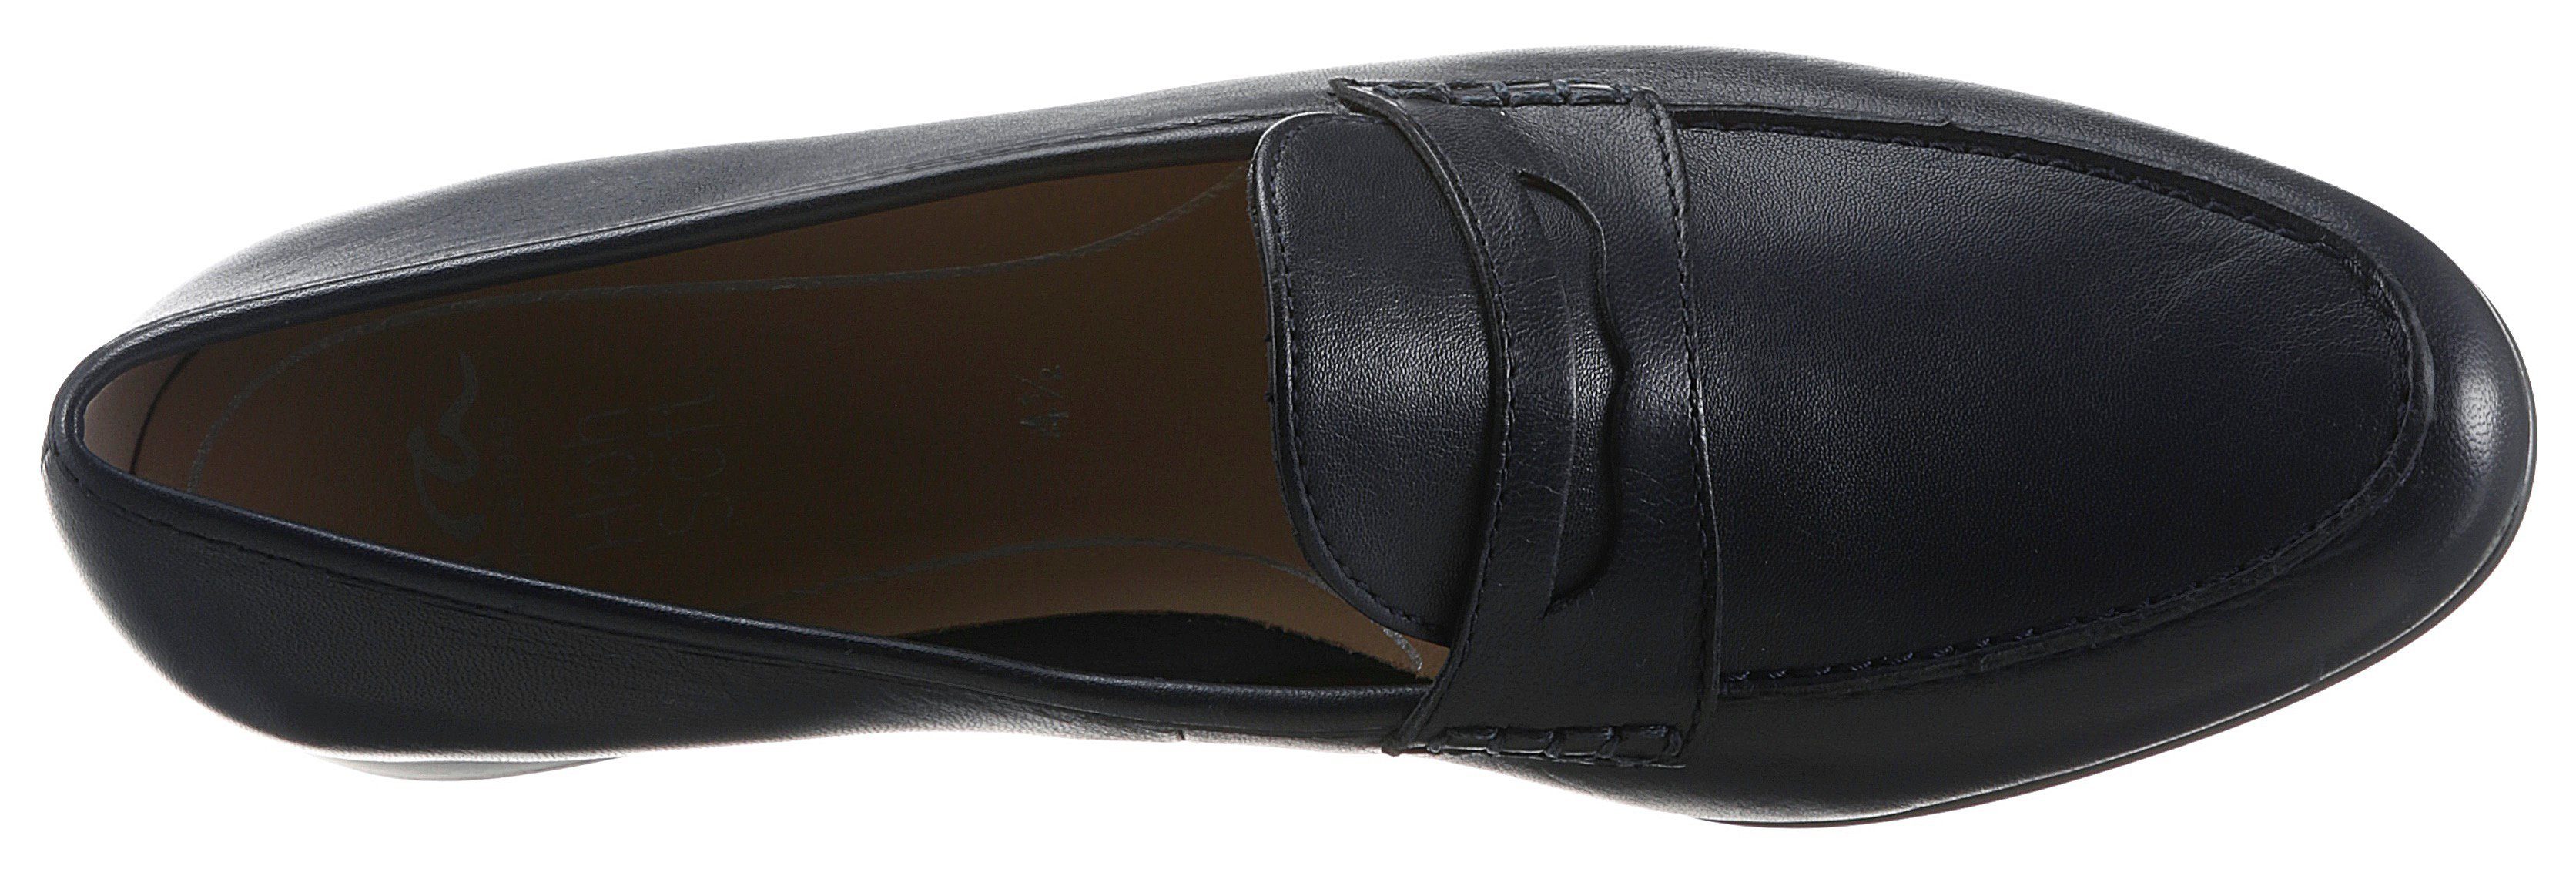 Ara KENT dunkelblau in schmale Slipper eleganter Schuhweite Form